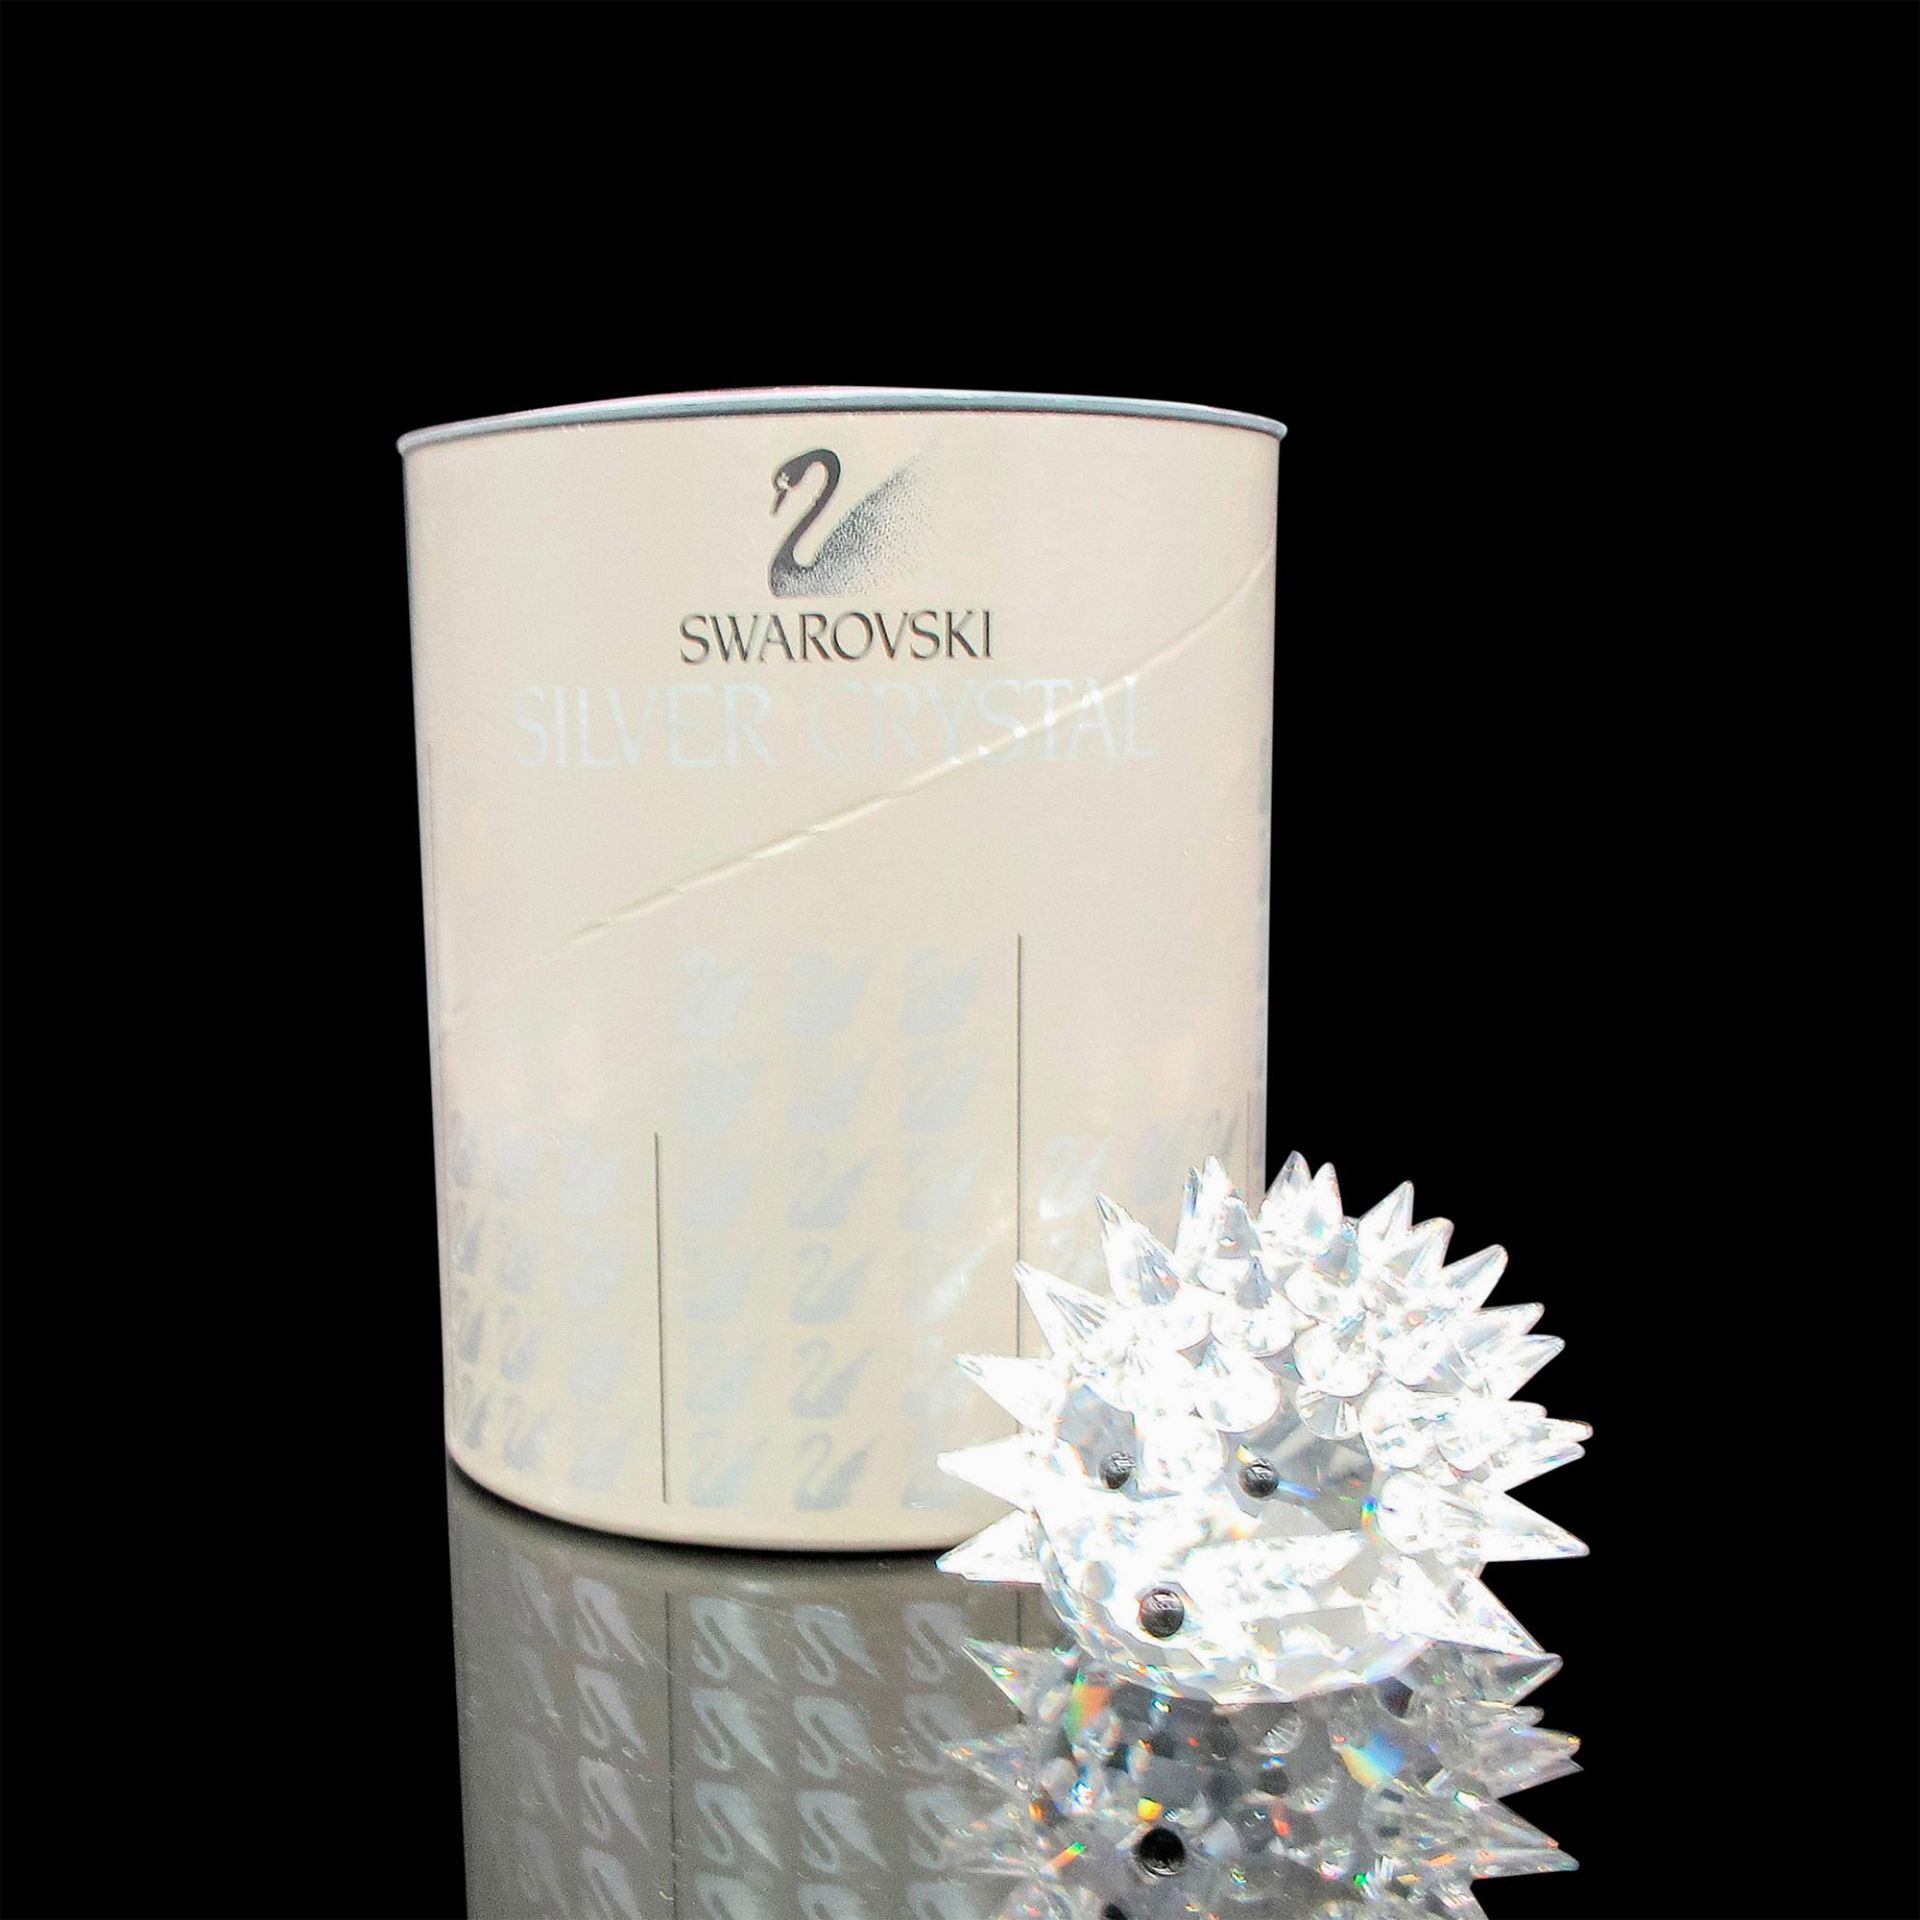 Swarovski Silver Crystal Figurine, Hedgehog Medium - Image 4 of 4